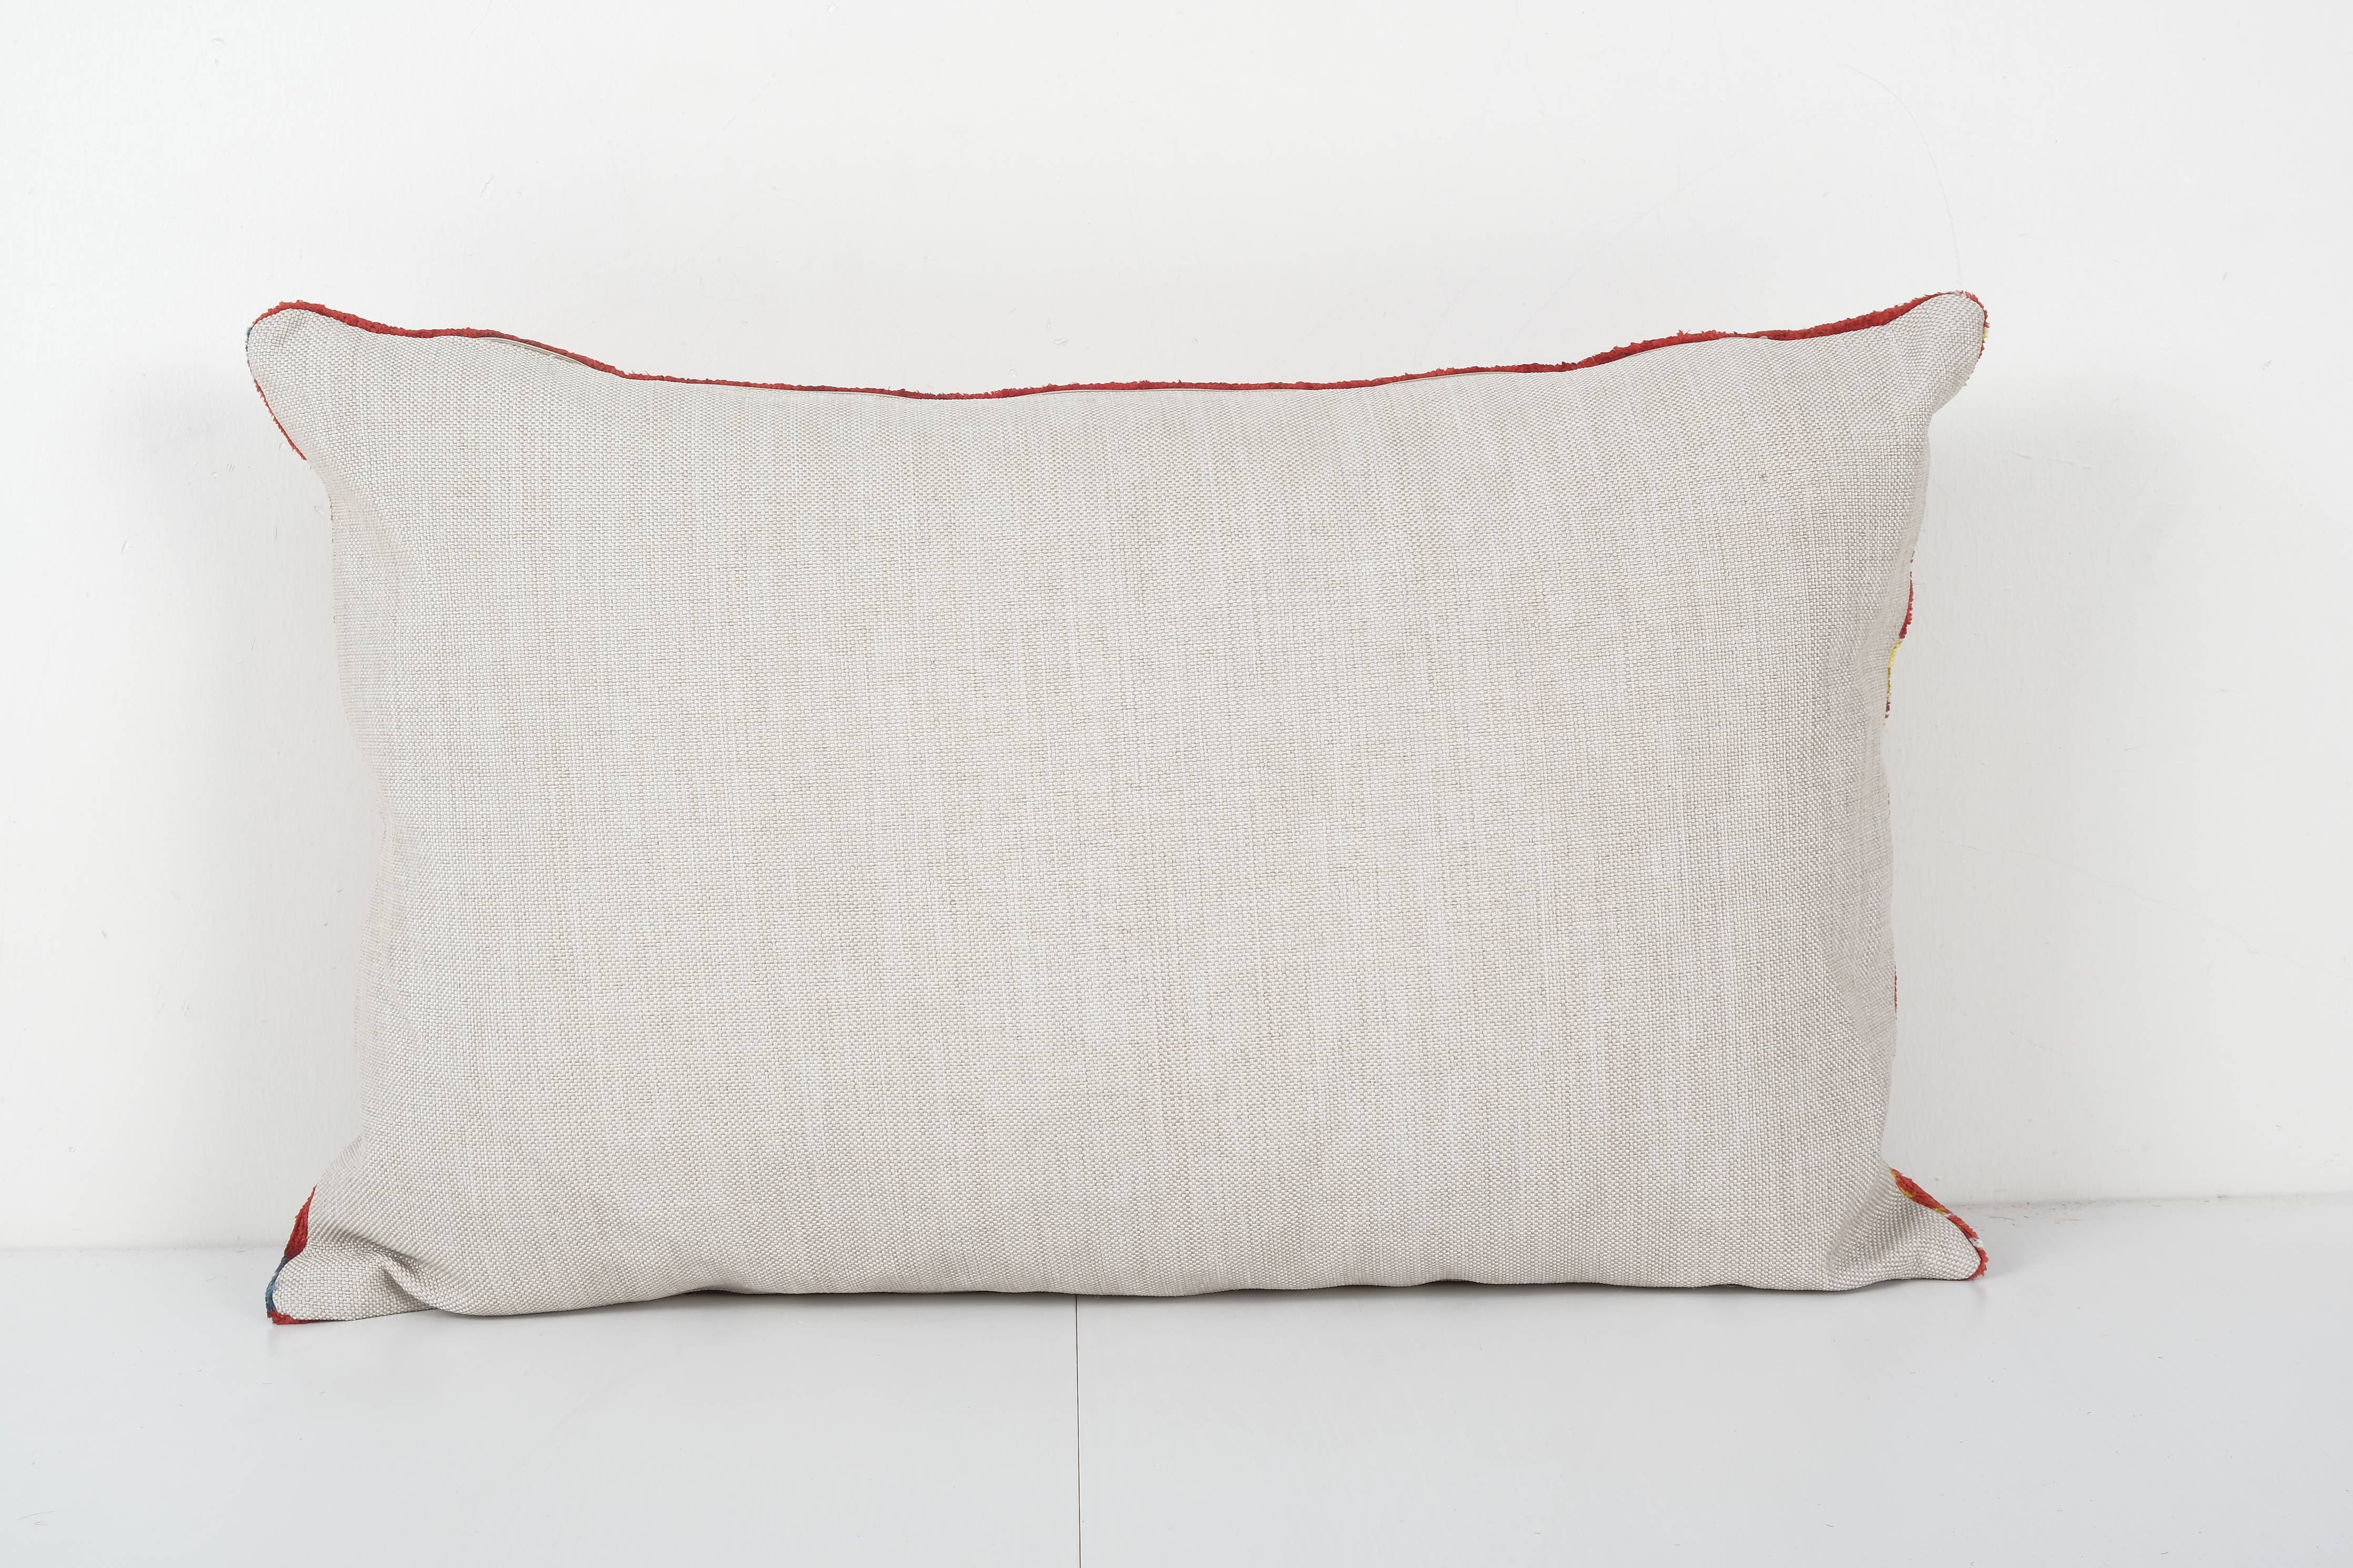 Fish Ikat Velvet Pillow, Red Silk Lumbar Cushion Cover, Boho